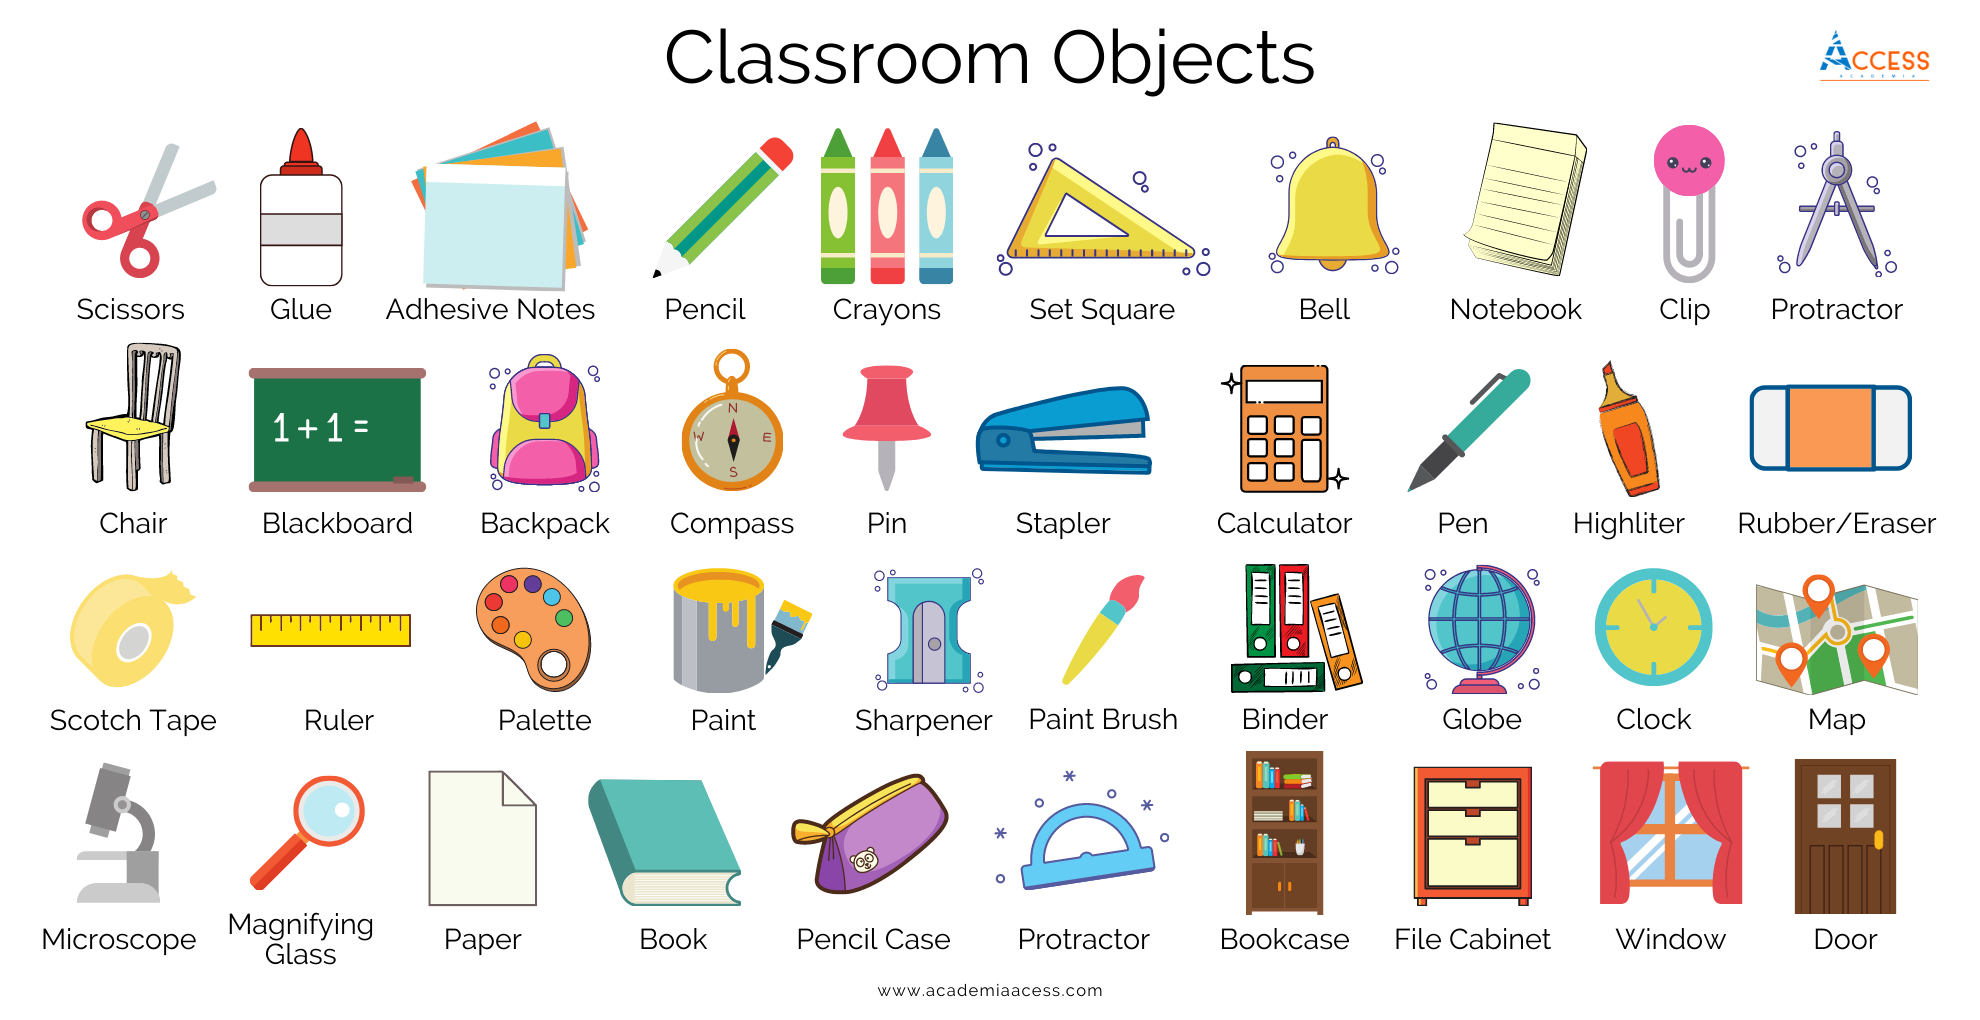 objetos del salon de clases, classroom objects, academia access, aprende inglÃ©s gratis